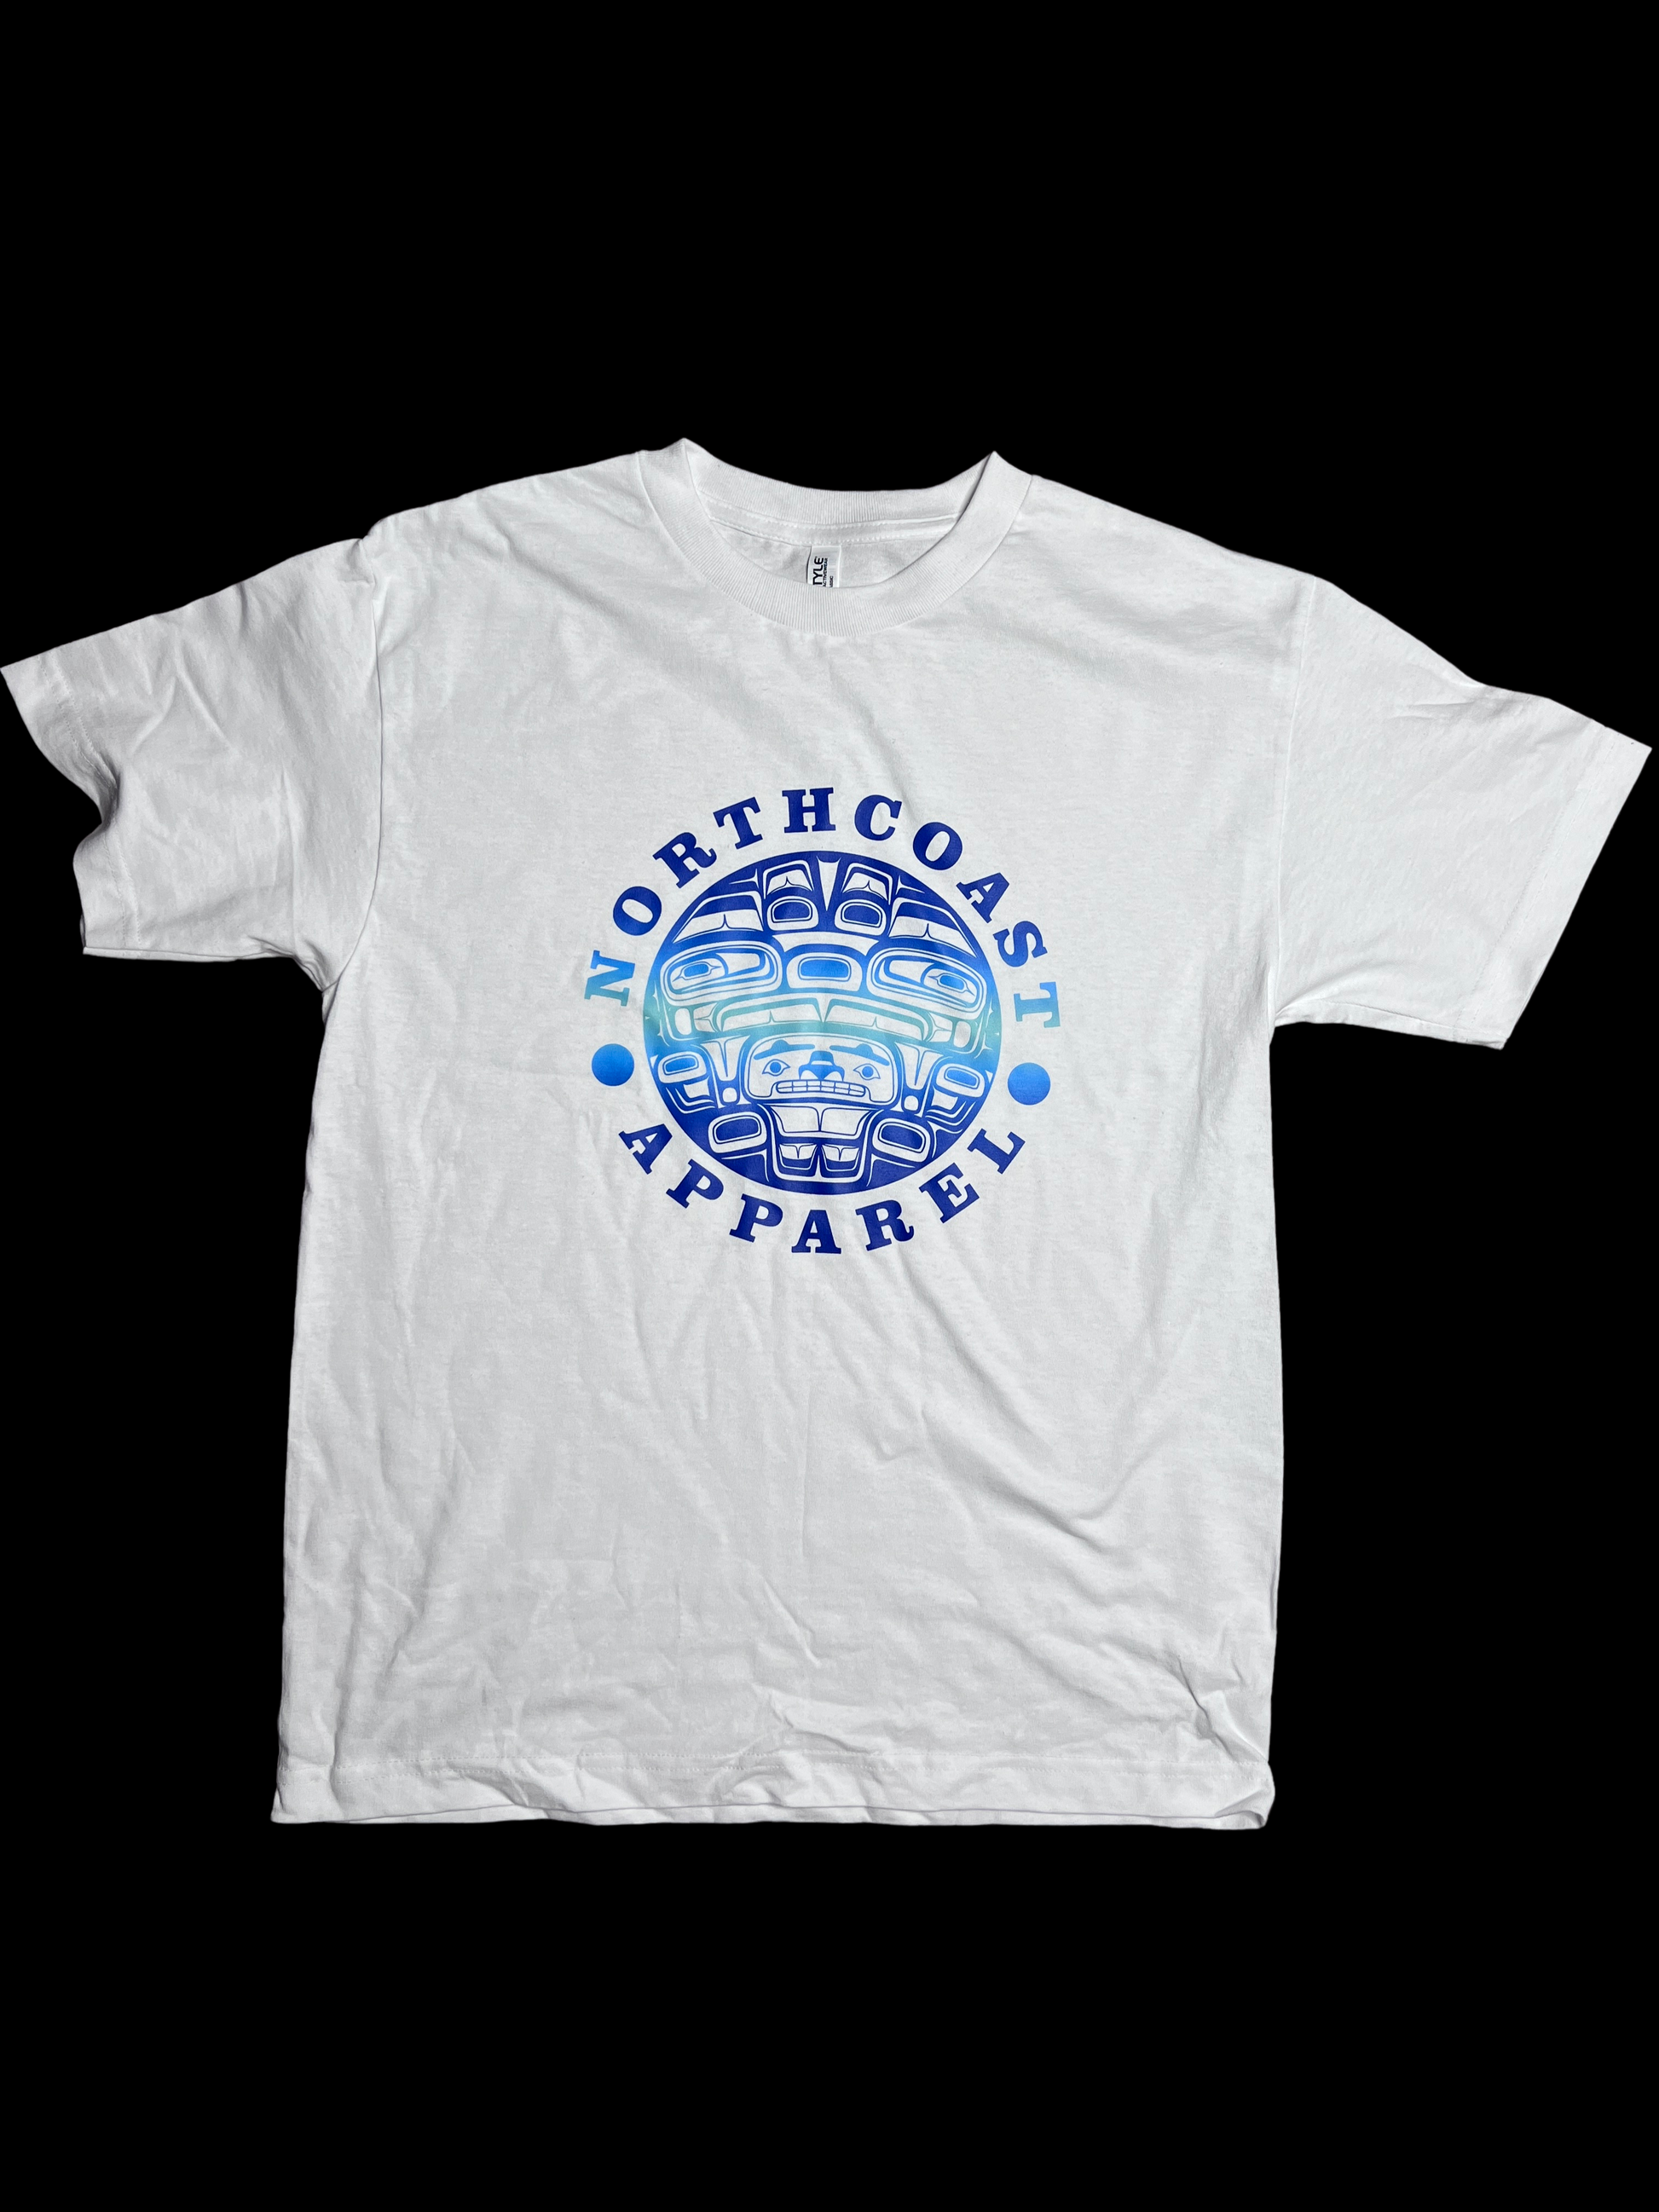 Northcoast Apparel T-shirt - Premium  from Northwest Coast Native Apparel/John P Wilson Haisla - Just $30! Shop now at Northwest Coast Native Apparel/John P Wilson Haisla